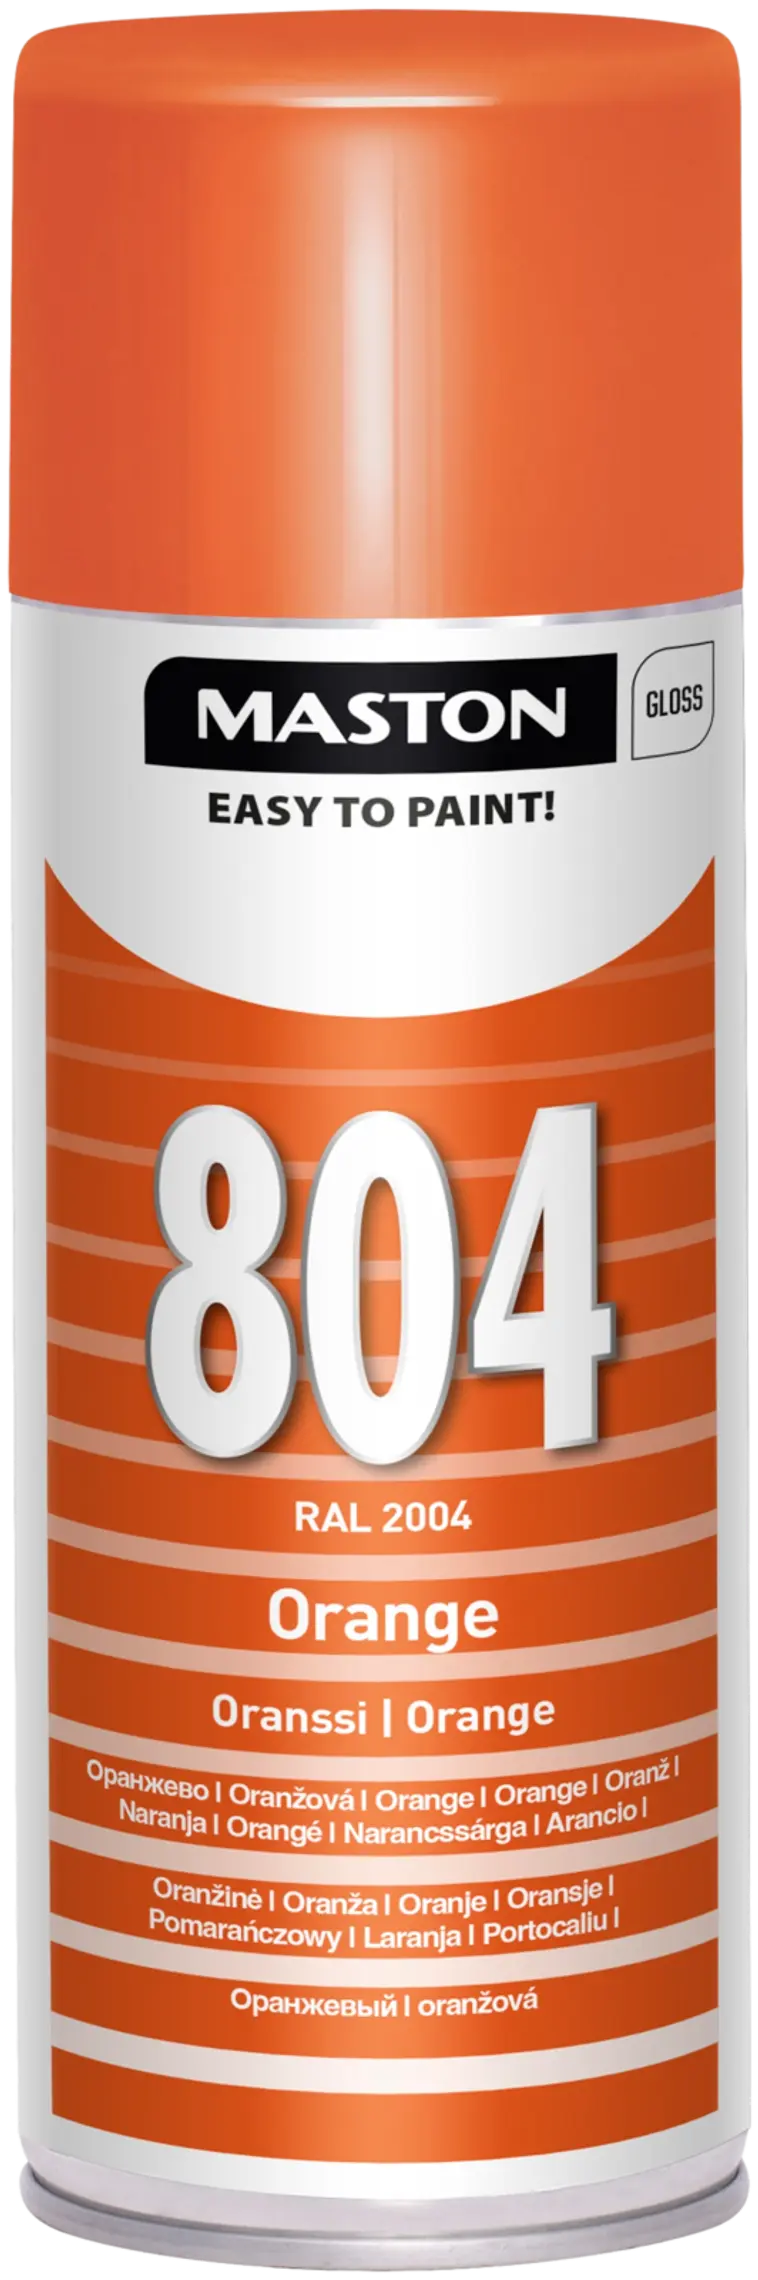 Maston spraymaali oranssi 804 400ml RAL 2004